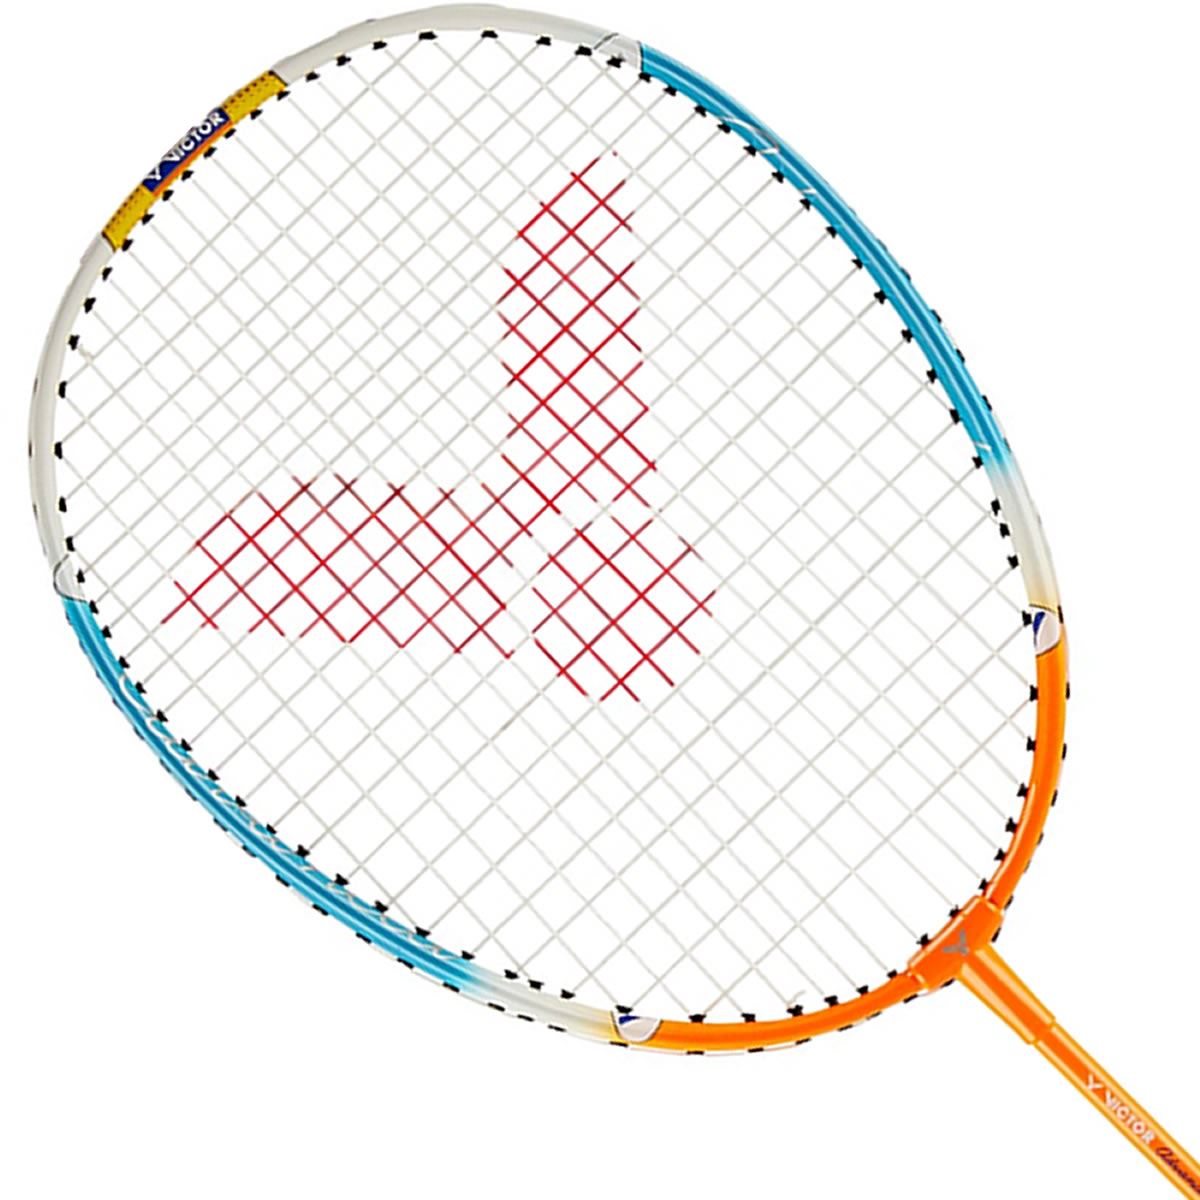 Victor Advanced Junior Badminton Racket - Orange Blue